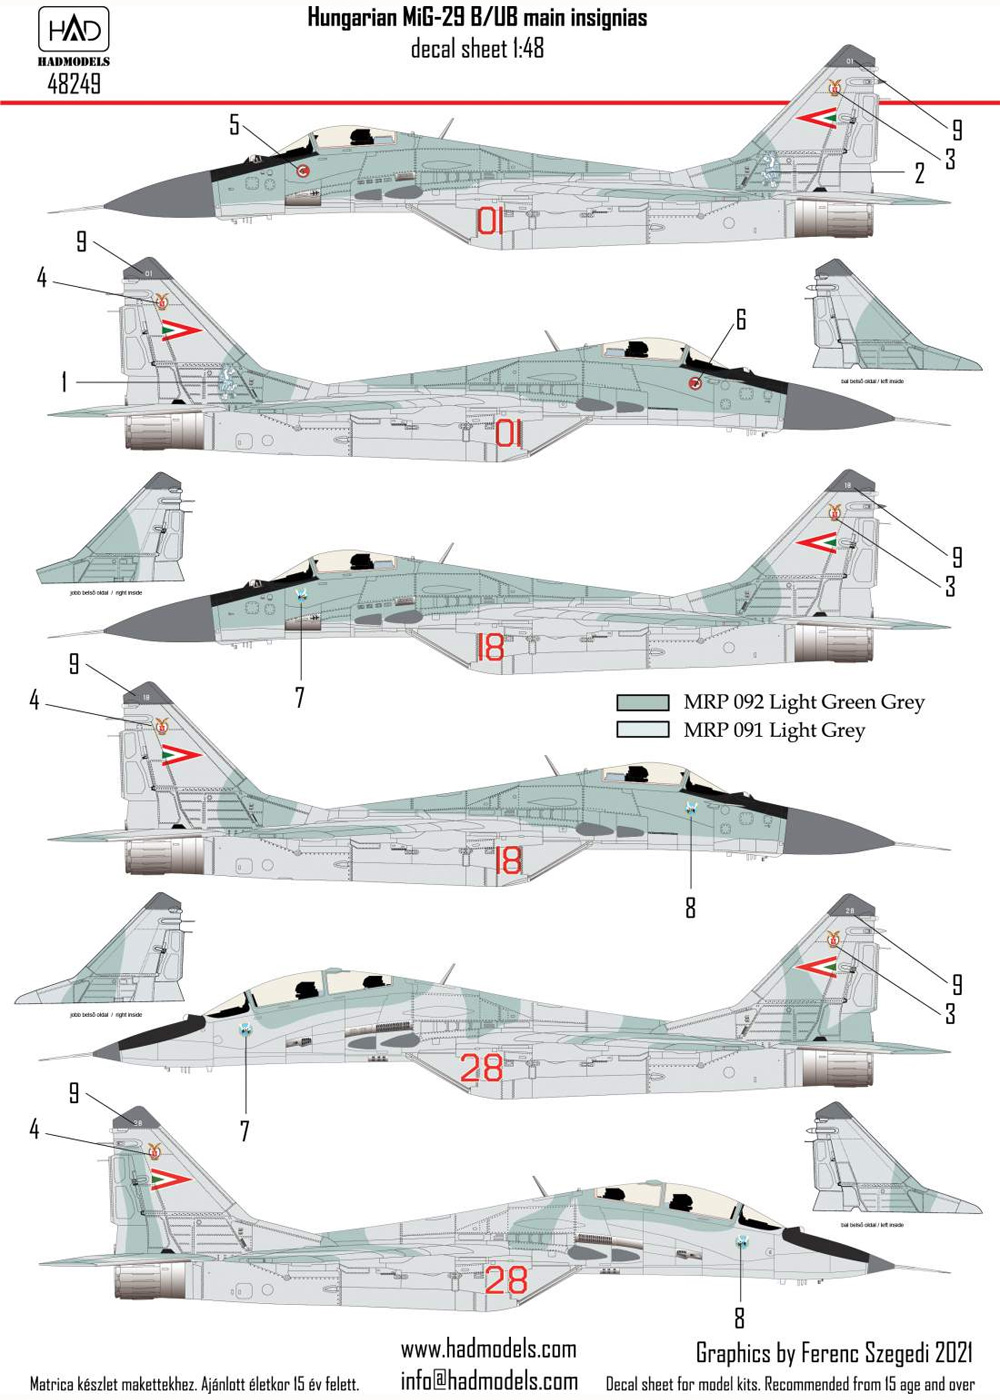 MiG-29B/UB ハンガリー空軍 デカール デカール (HAD MODELS 1/48 デカール No.48249) 商品画像_2